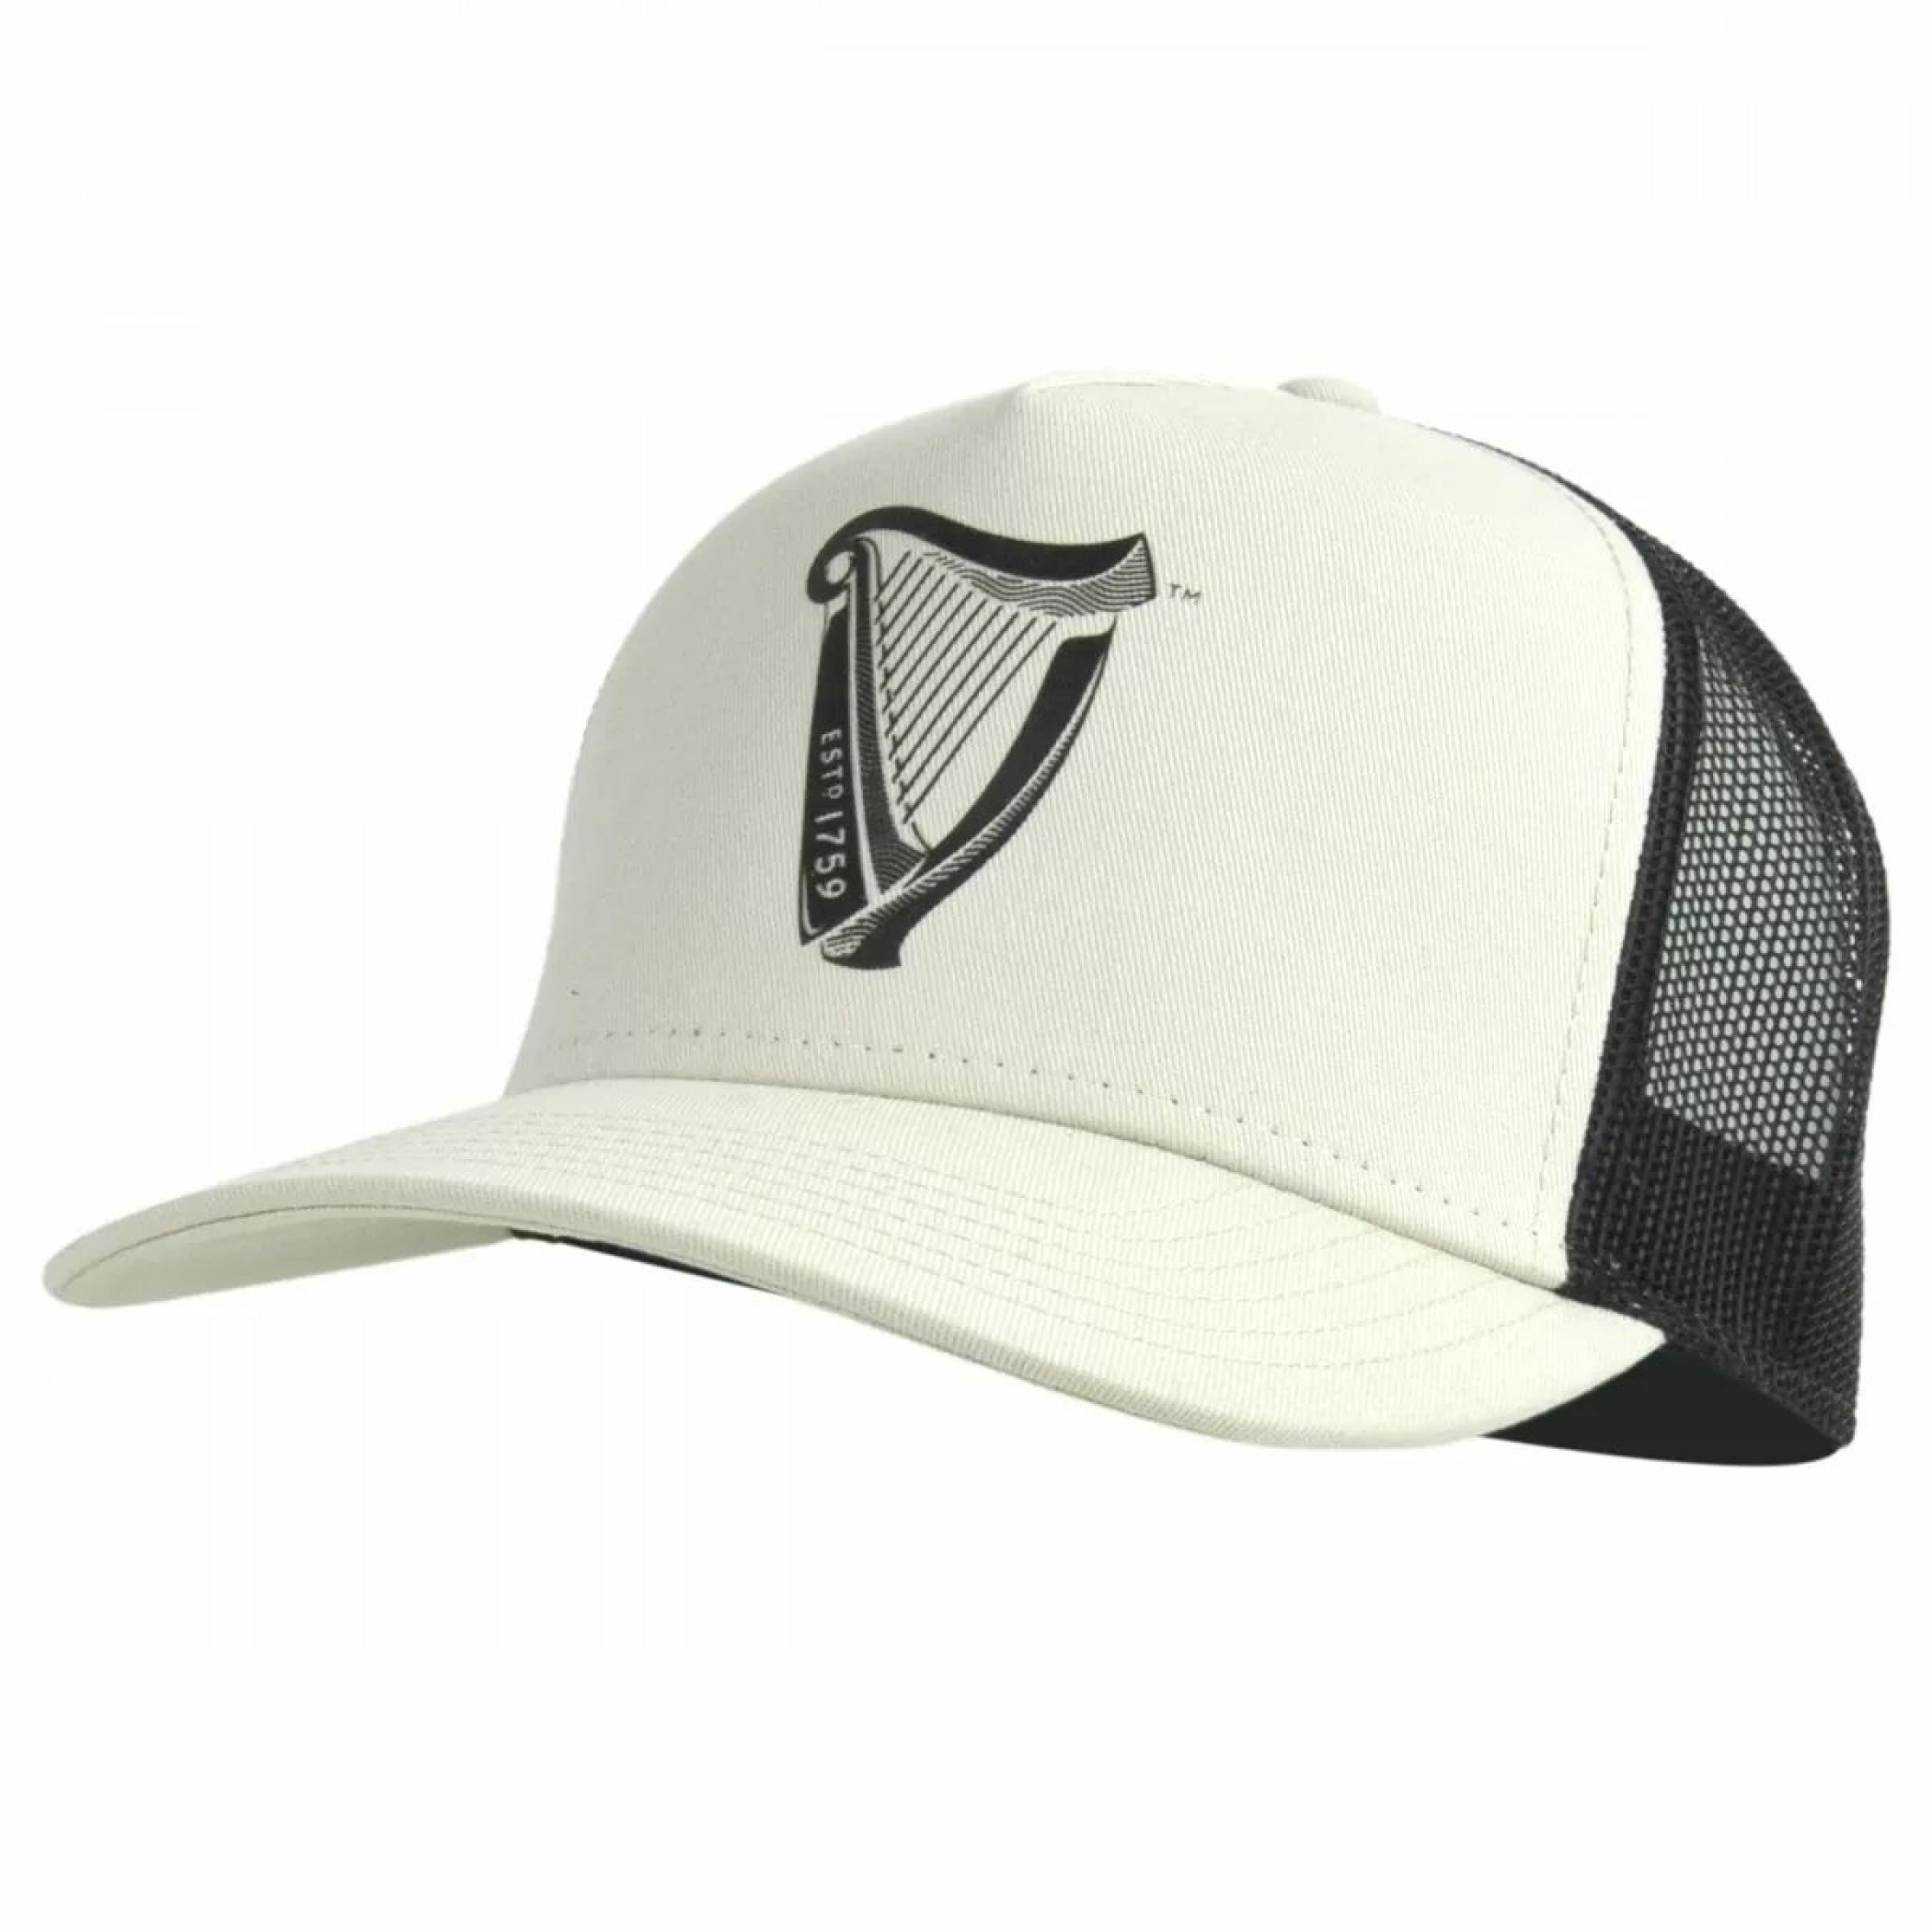 Guinness Harp Logo Black and Beige Colorway Trucker Hat